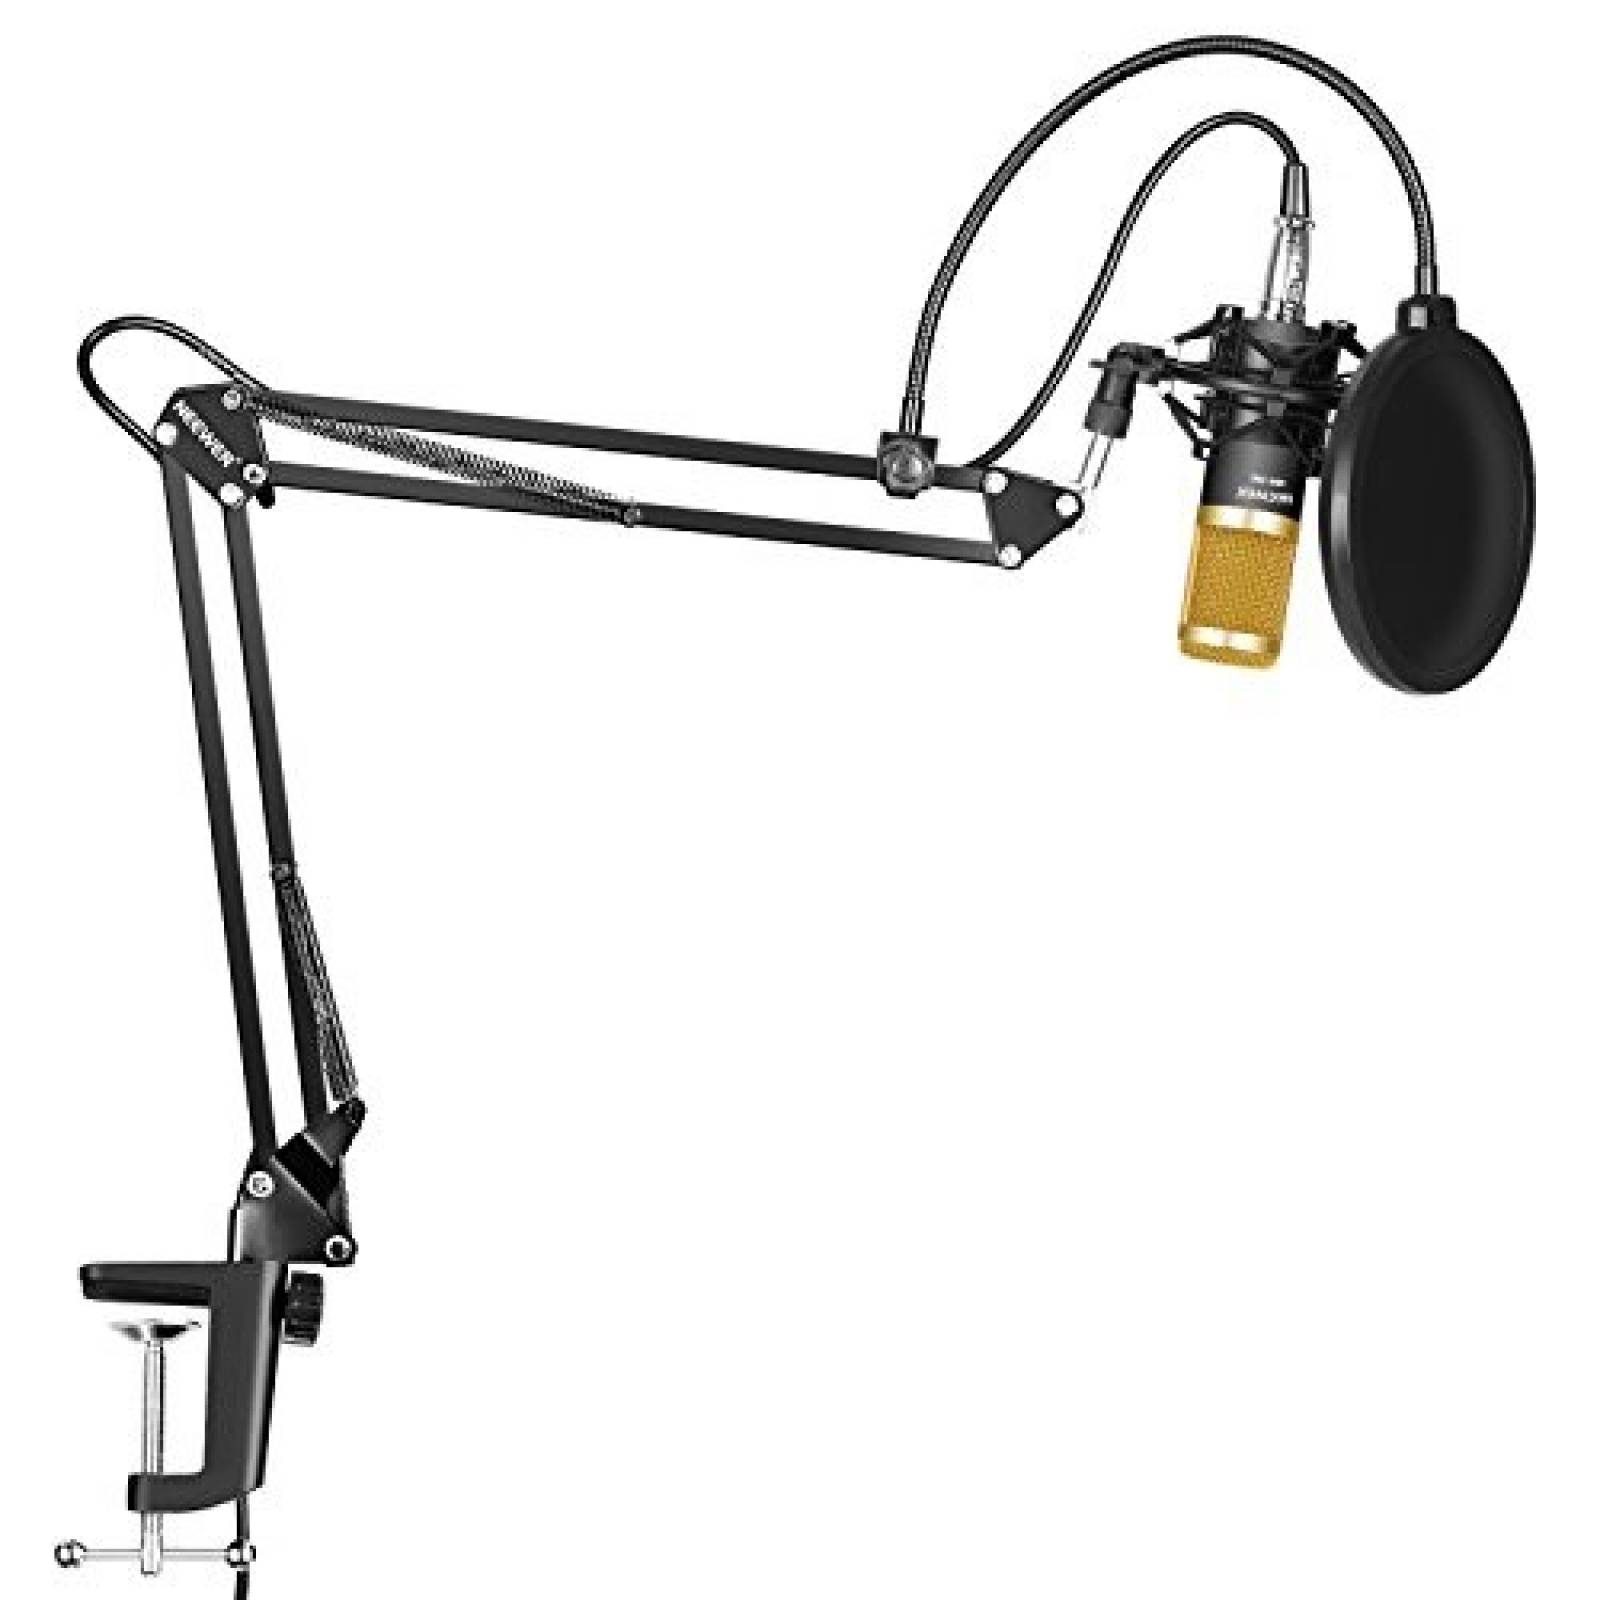 Kit de micrófono condensador Neewer Pro para radio